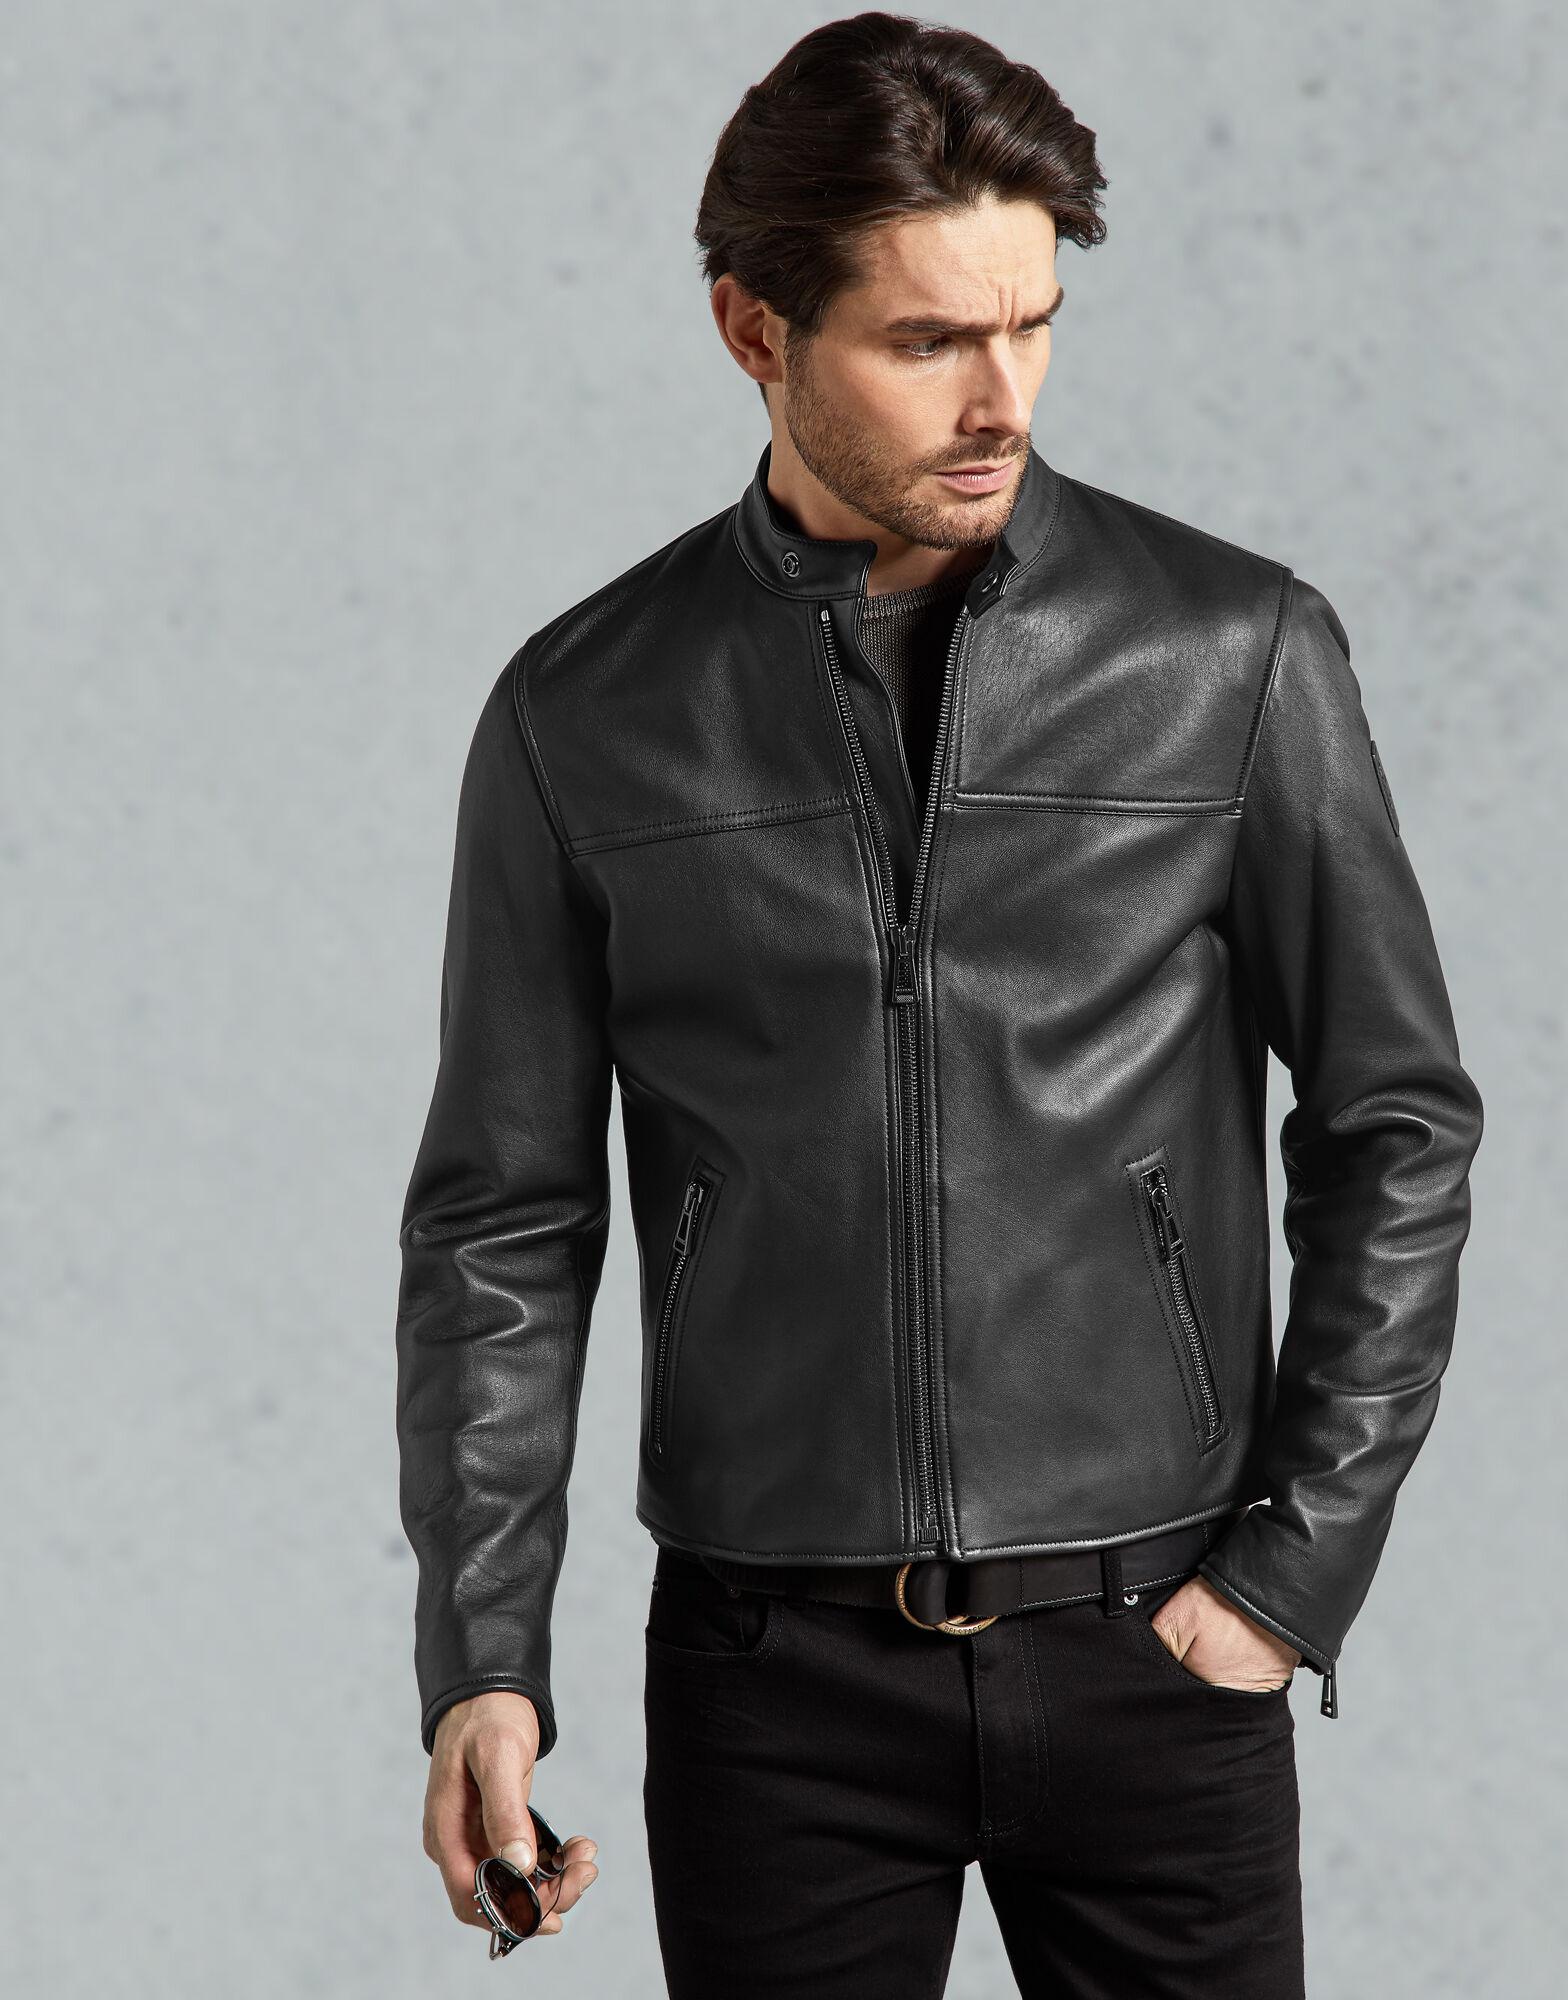 Belstaff Pelham Leather Jacket in Black for Men - Lyst